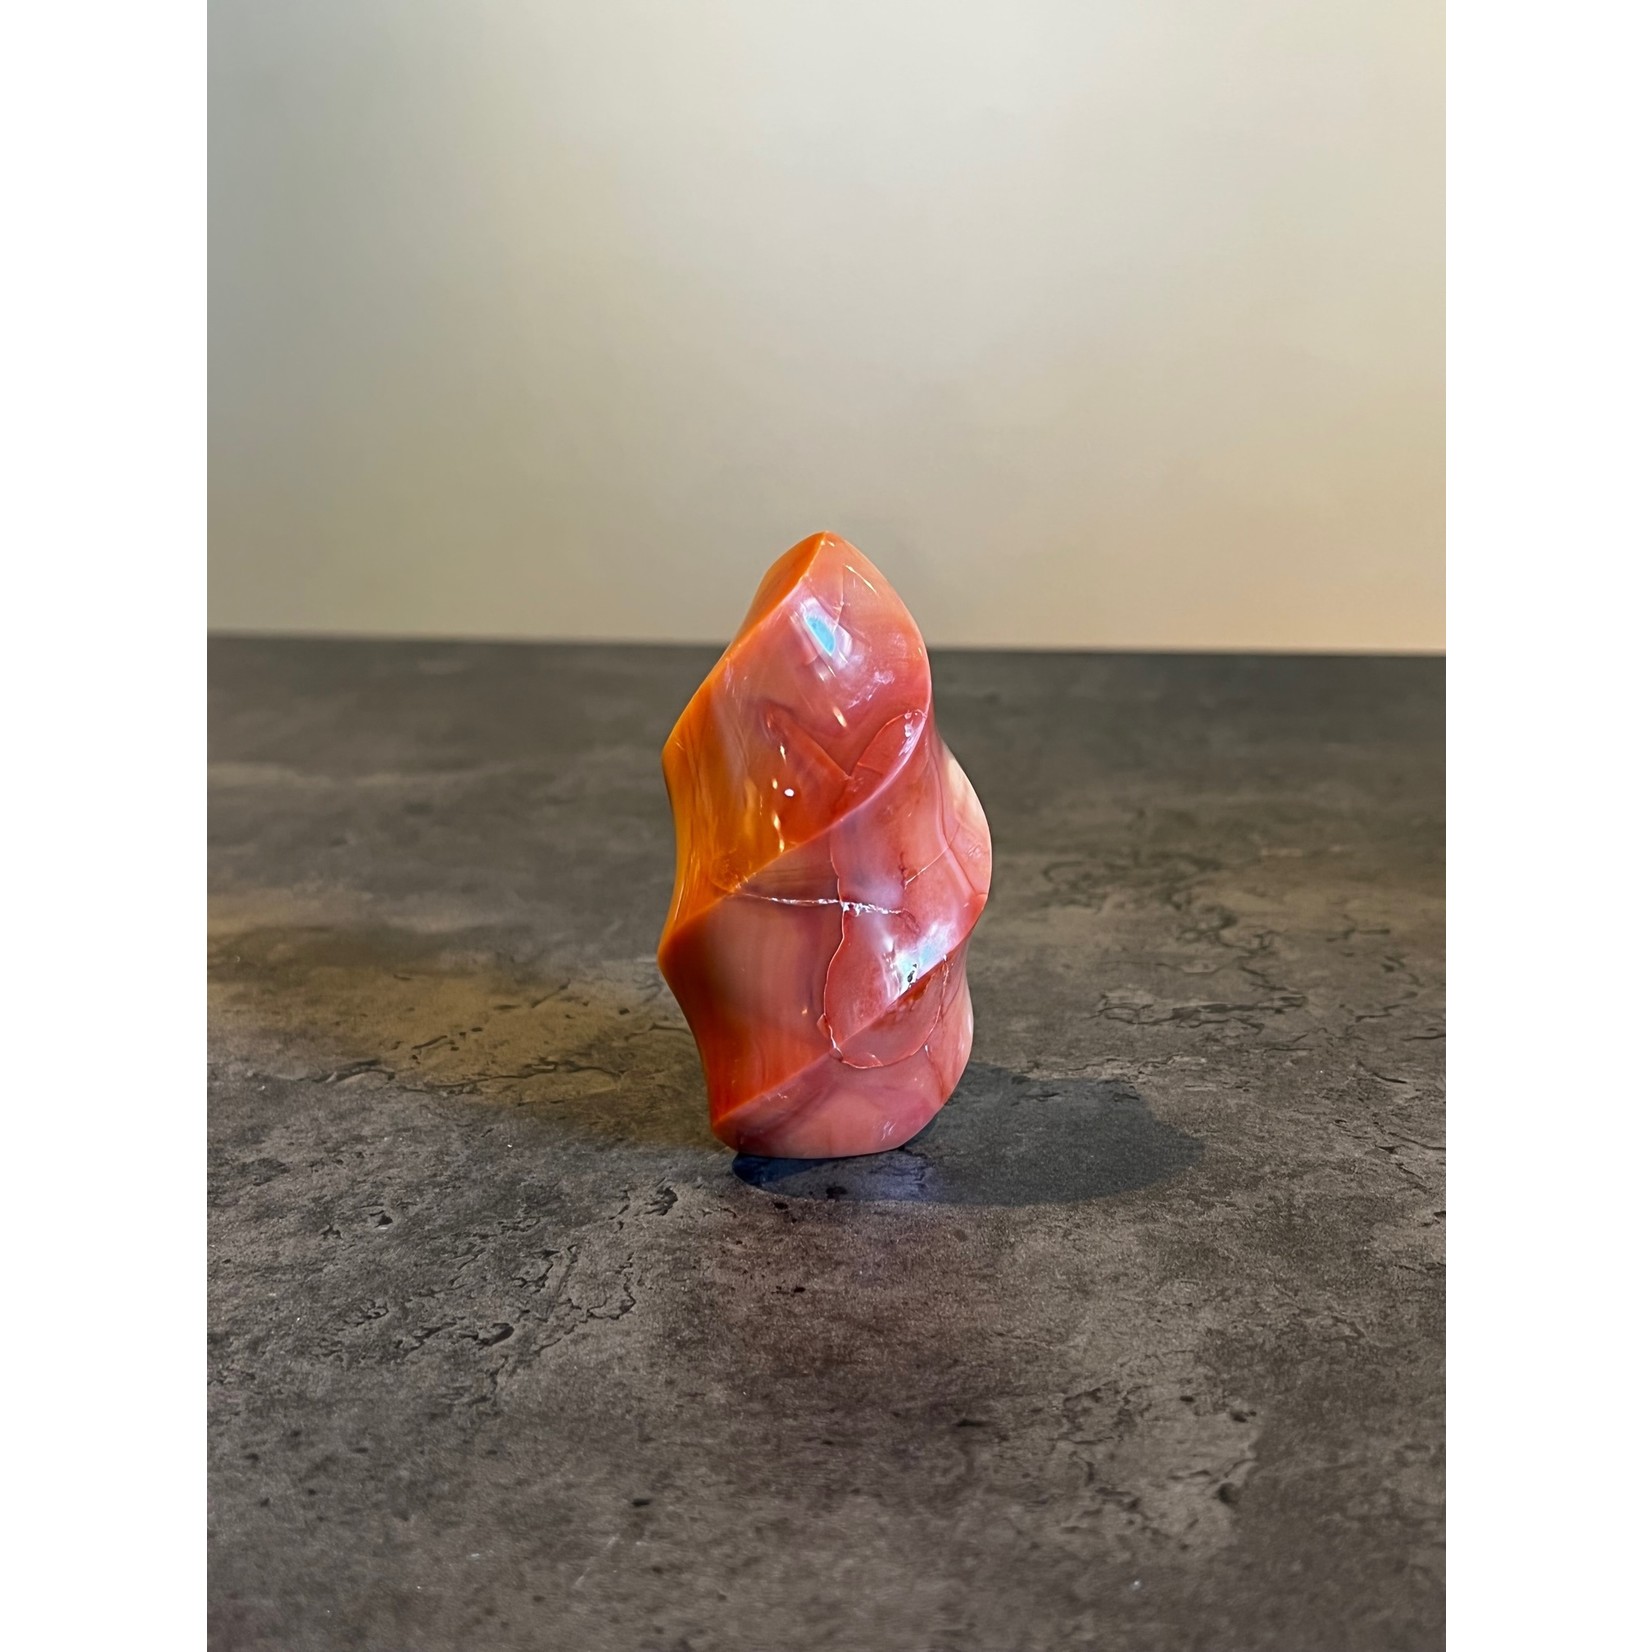 Carneool kleine vlam sculptuur staand oranje/wit